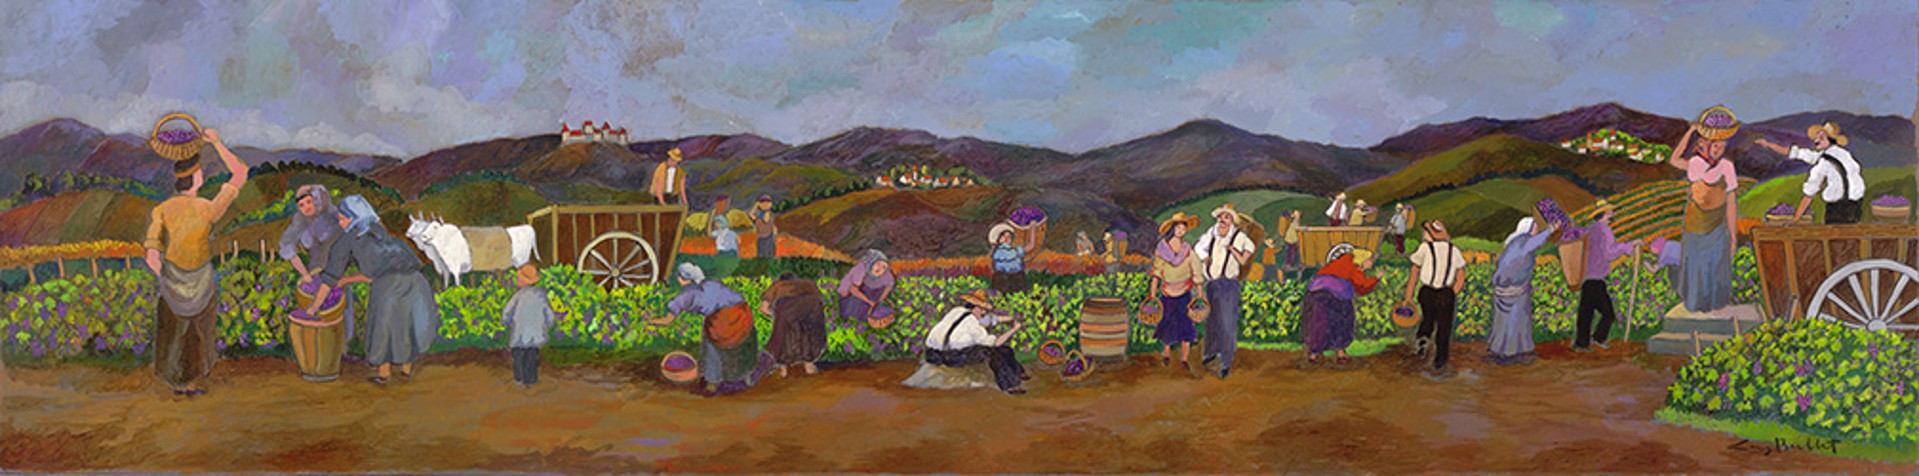 Harvest In Burgundy by Guy Buffet